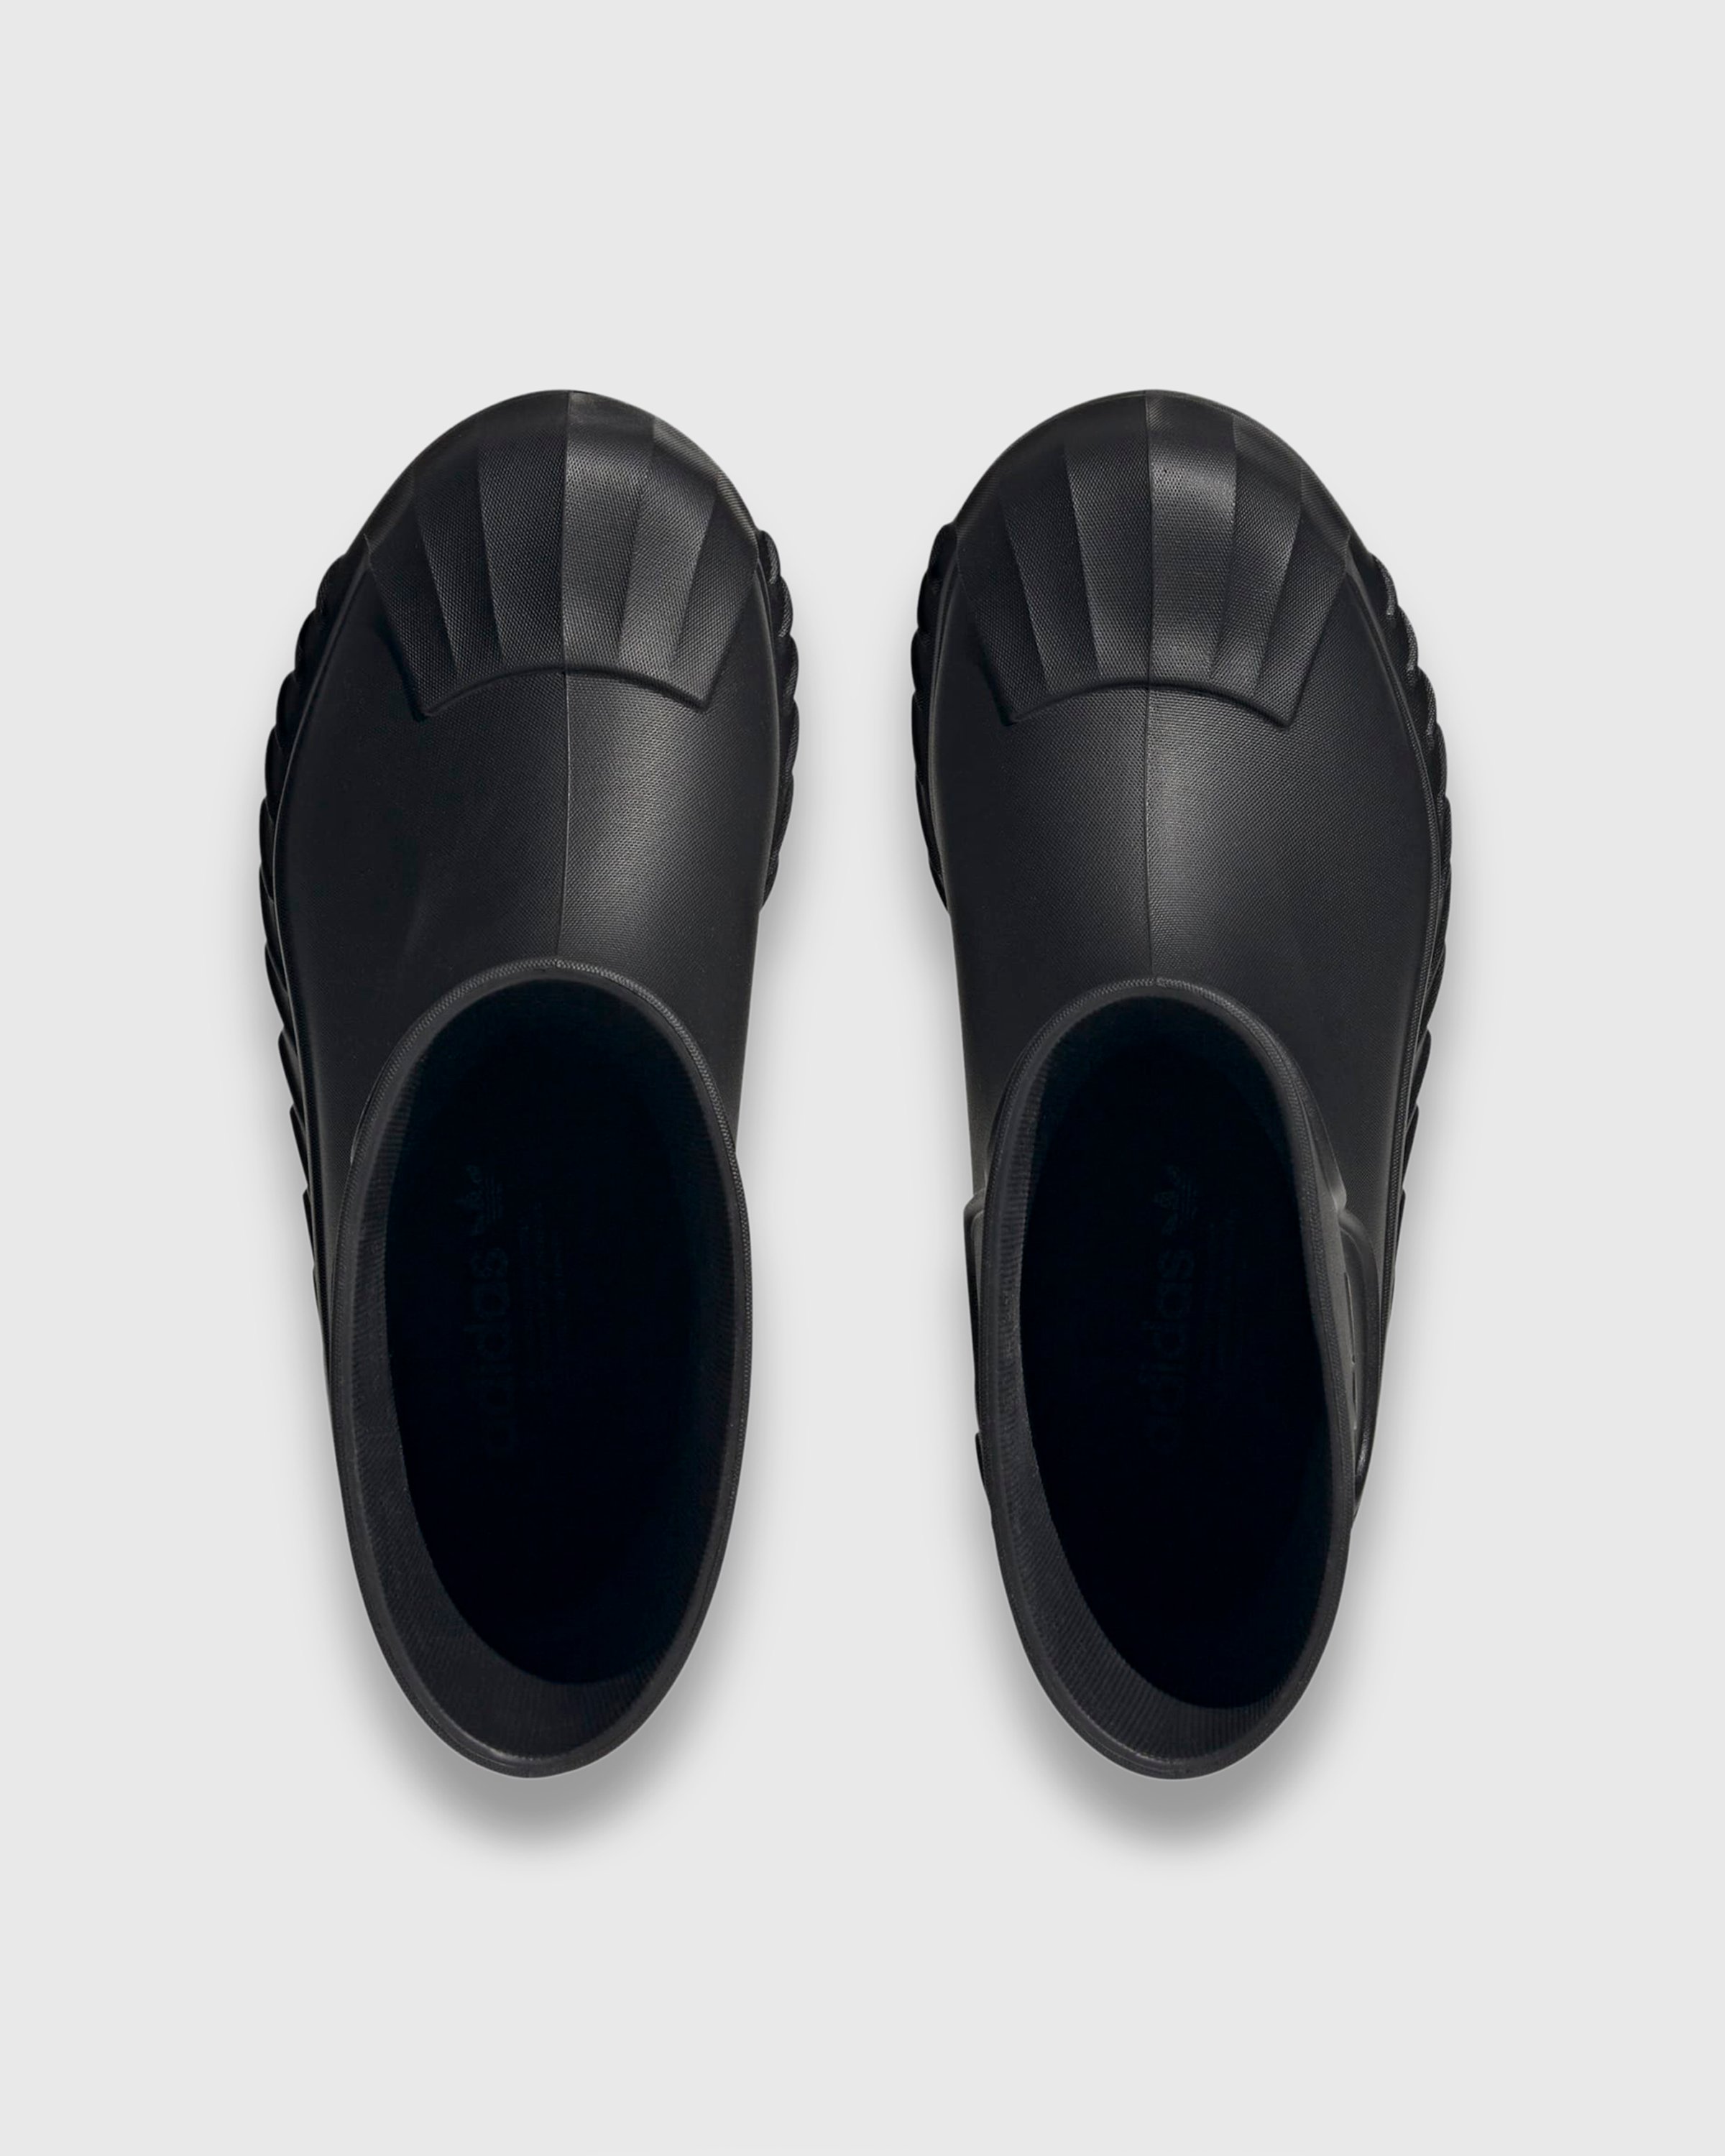 Adidas - ADIFOM SUPERSTAR BO CBLACK/CBLACK/GRESIX - Footwear - Black - Image 5